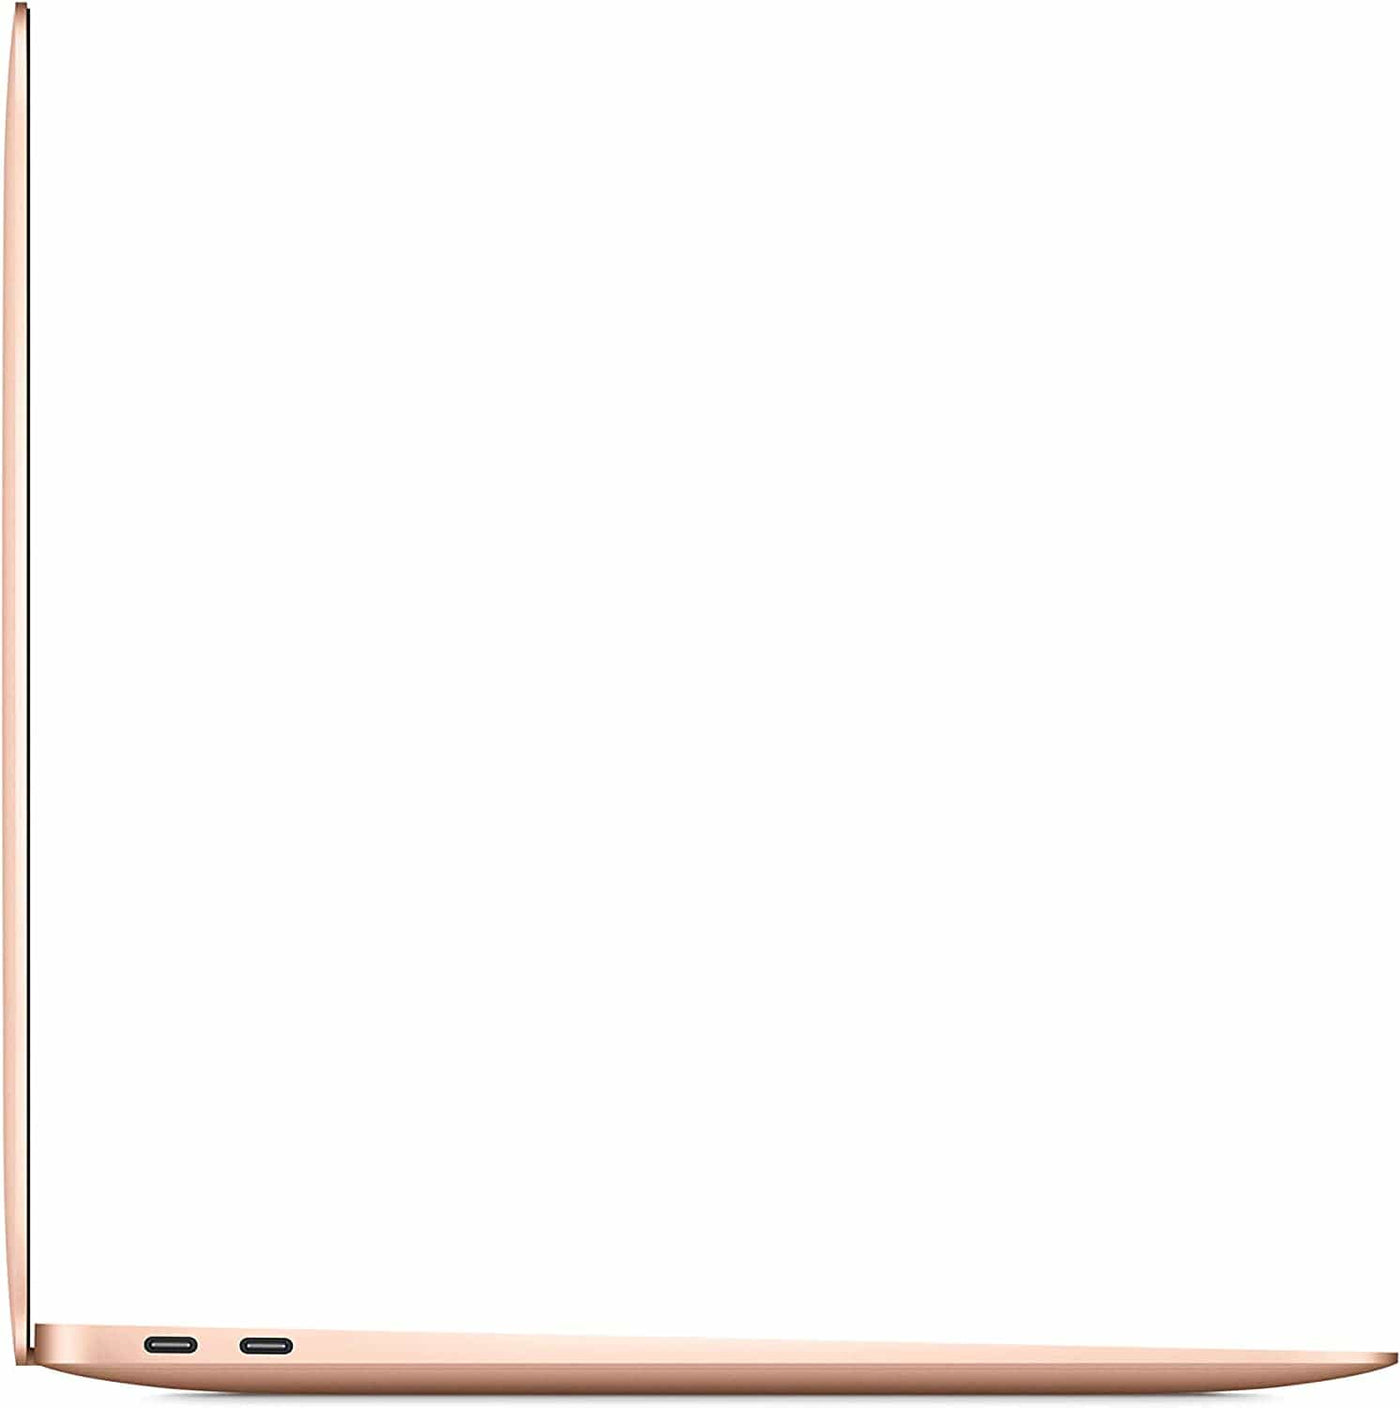 2020 Apple MacBook Air Laptop with M1 Chip, 13” Retina Display - Smart Tech Shopping